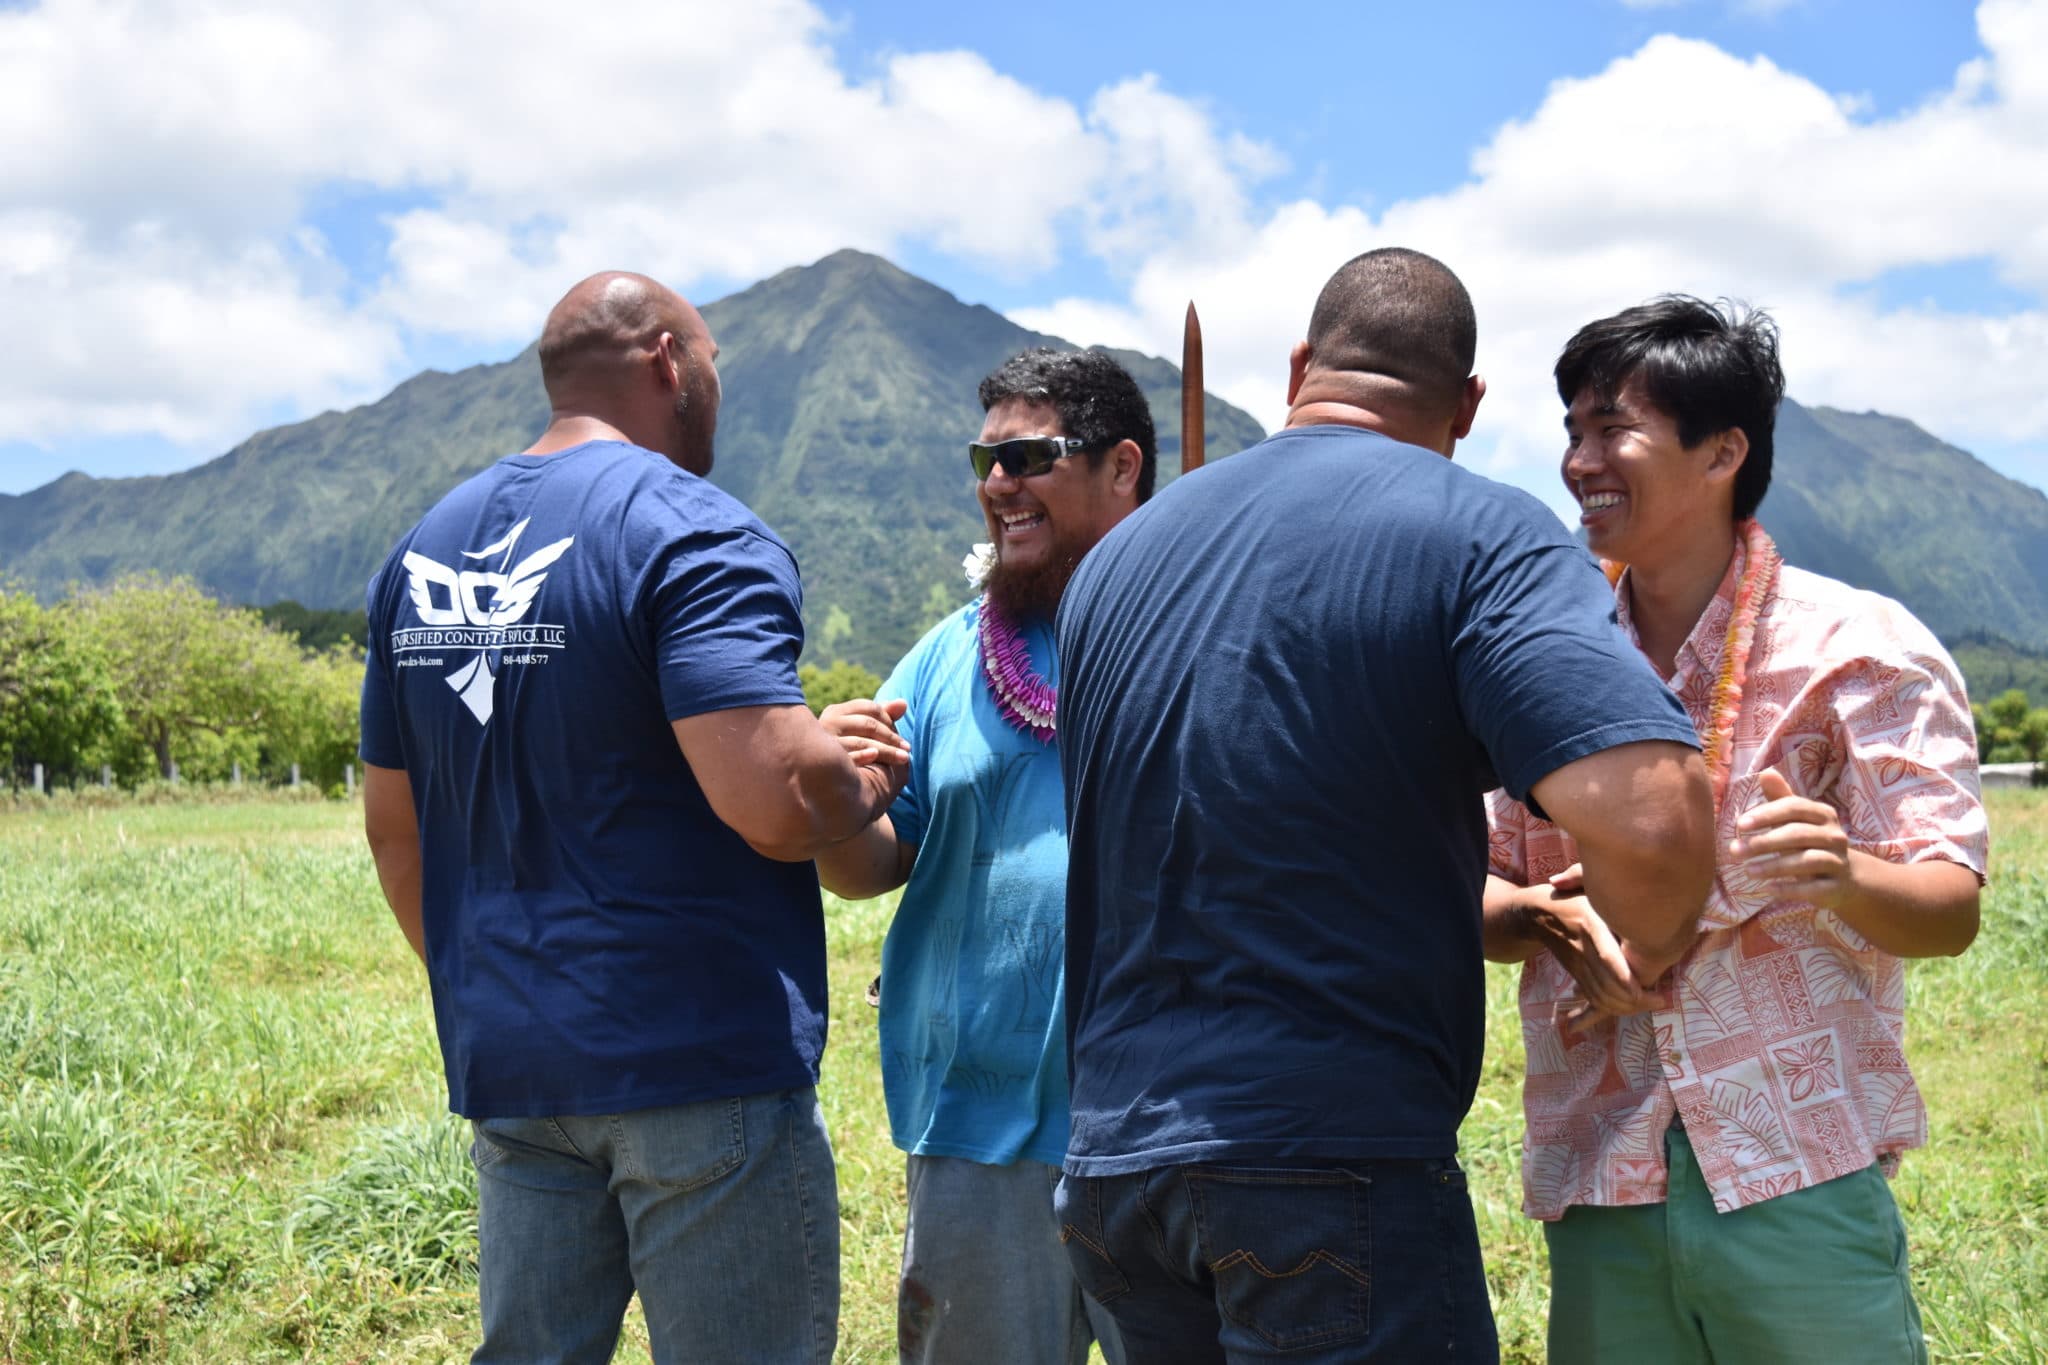 Kupa ʻAina Staff Greet Visitors